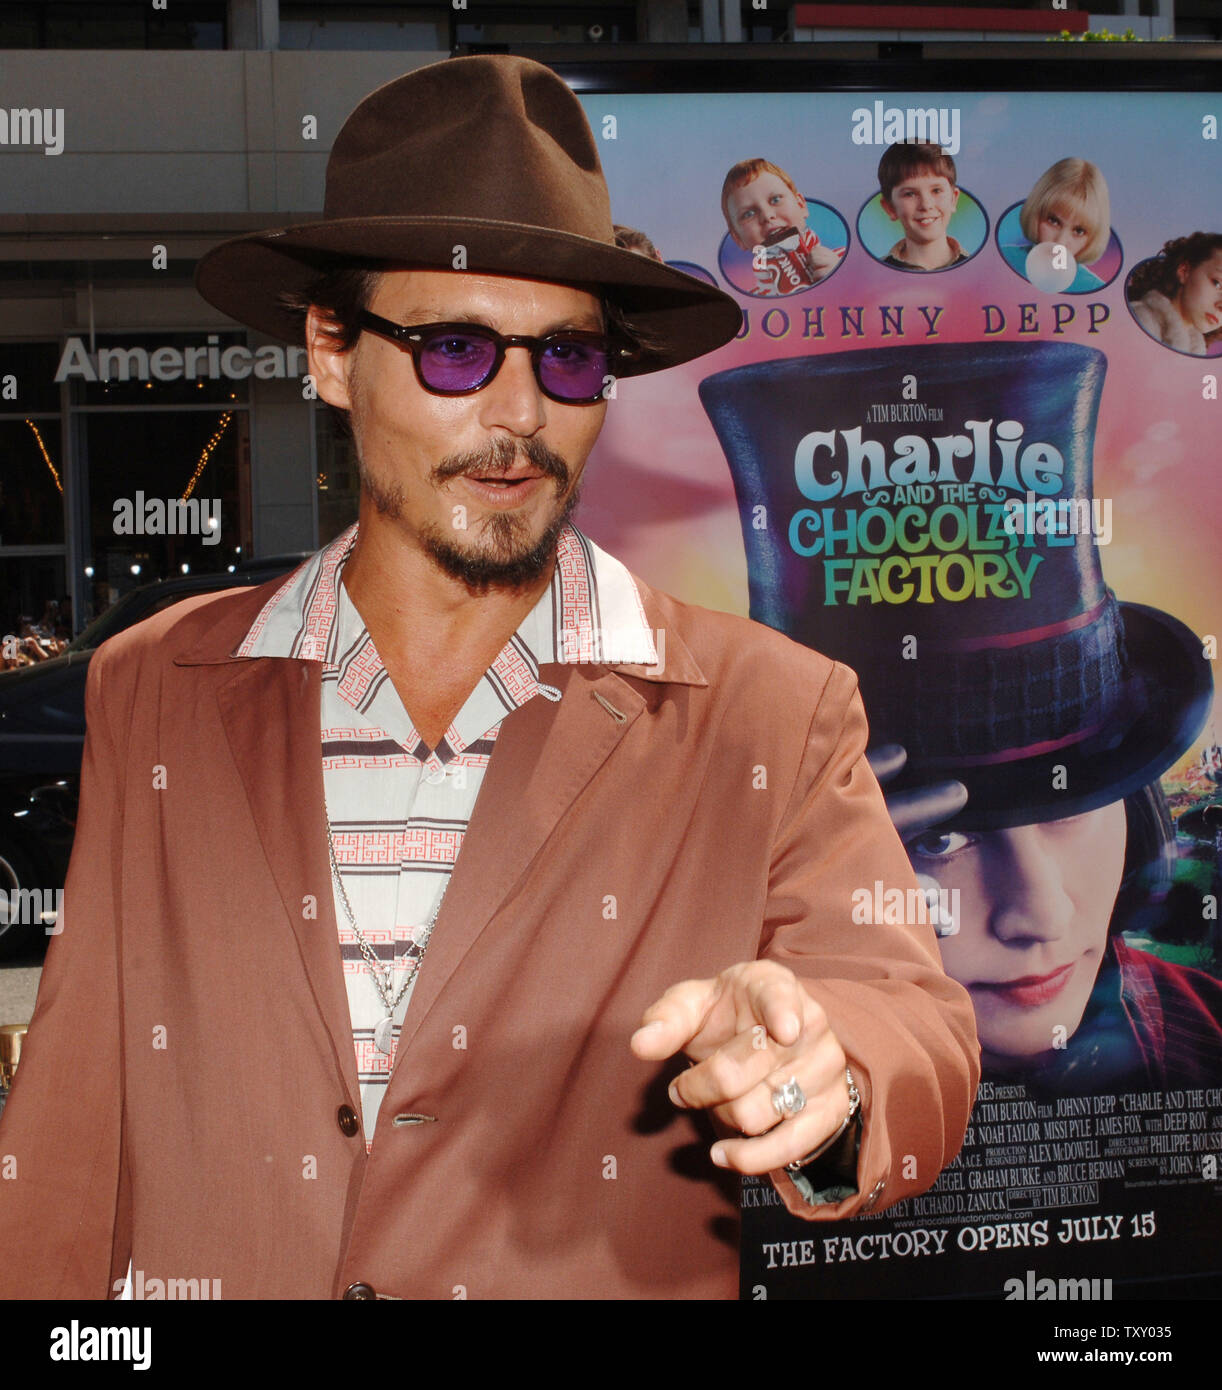 Johnny Depp a great character actor: Tim Burton